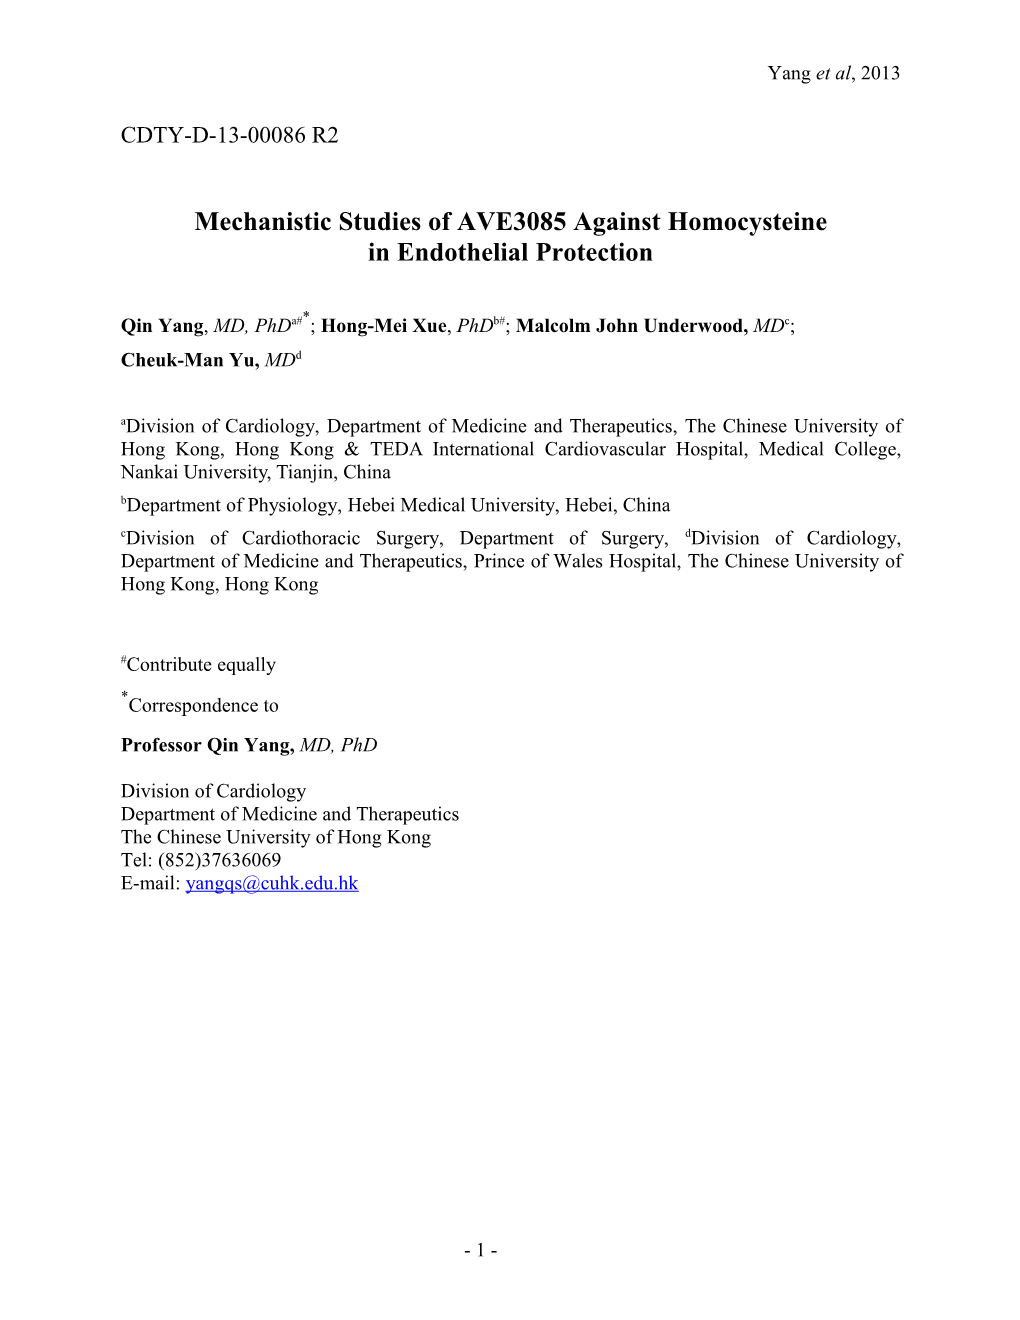 Mechanistic Studies of AVE3085 Against Homocysteine